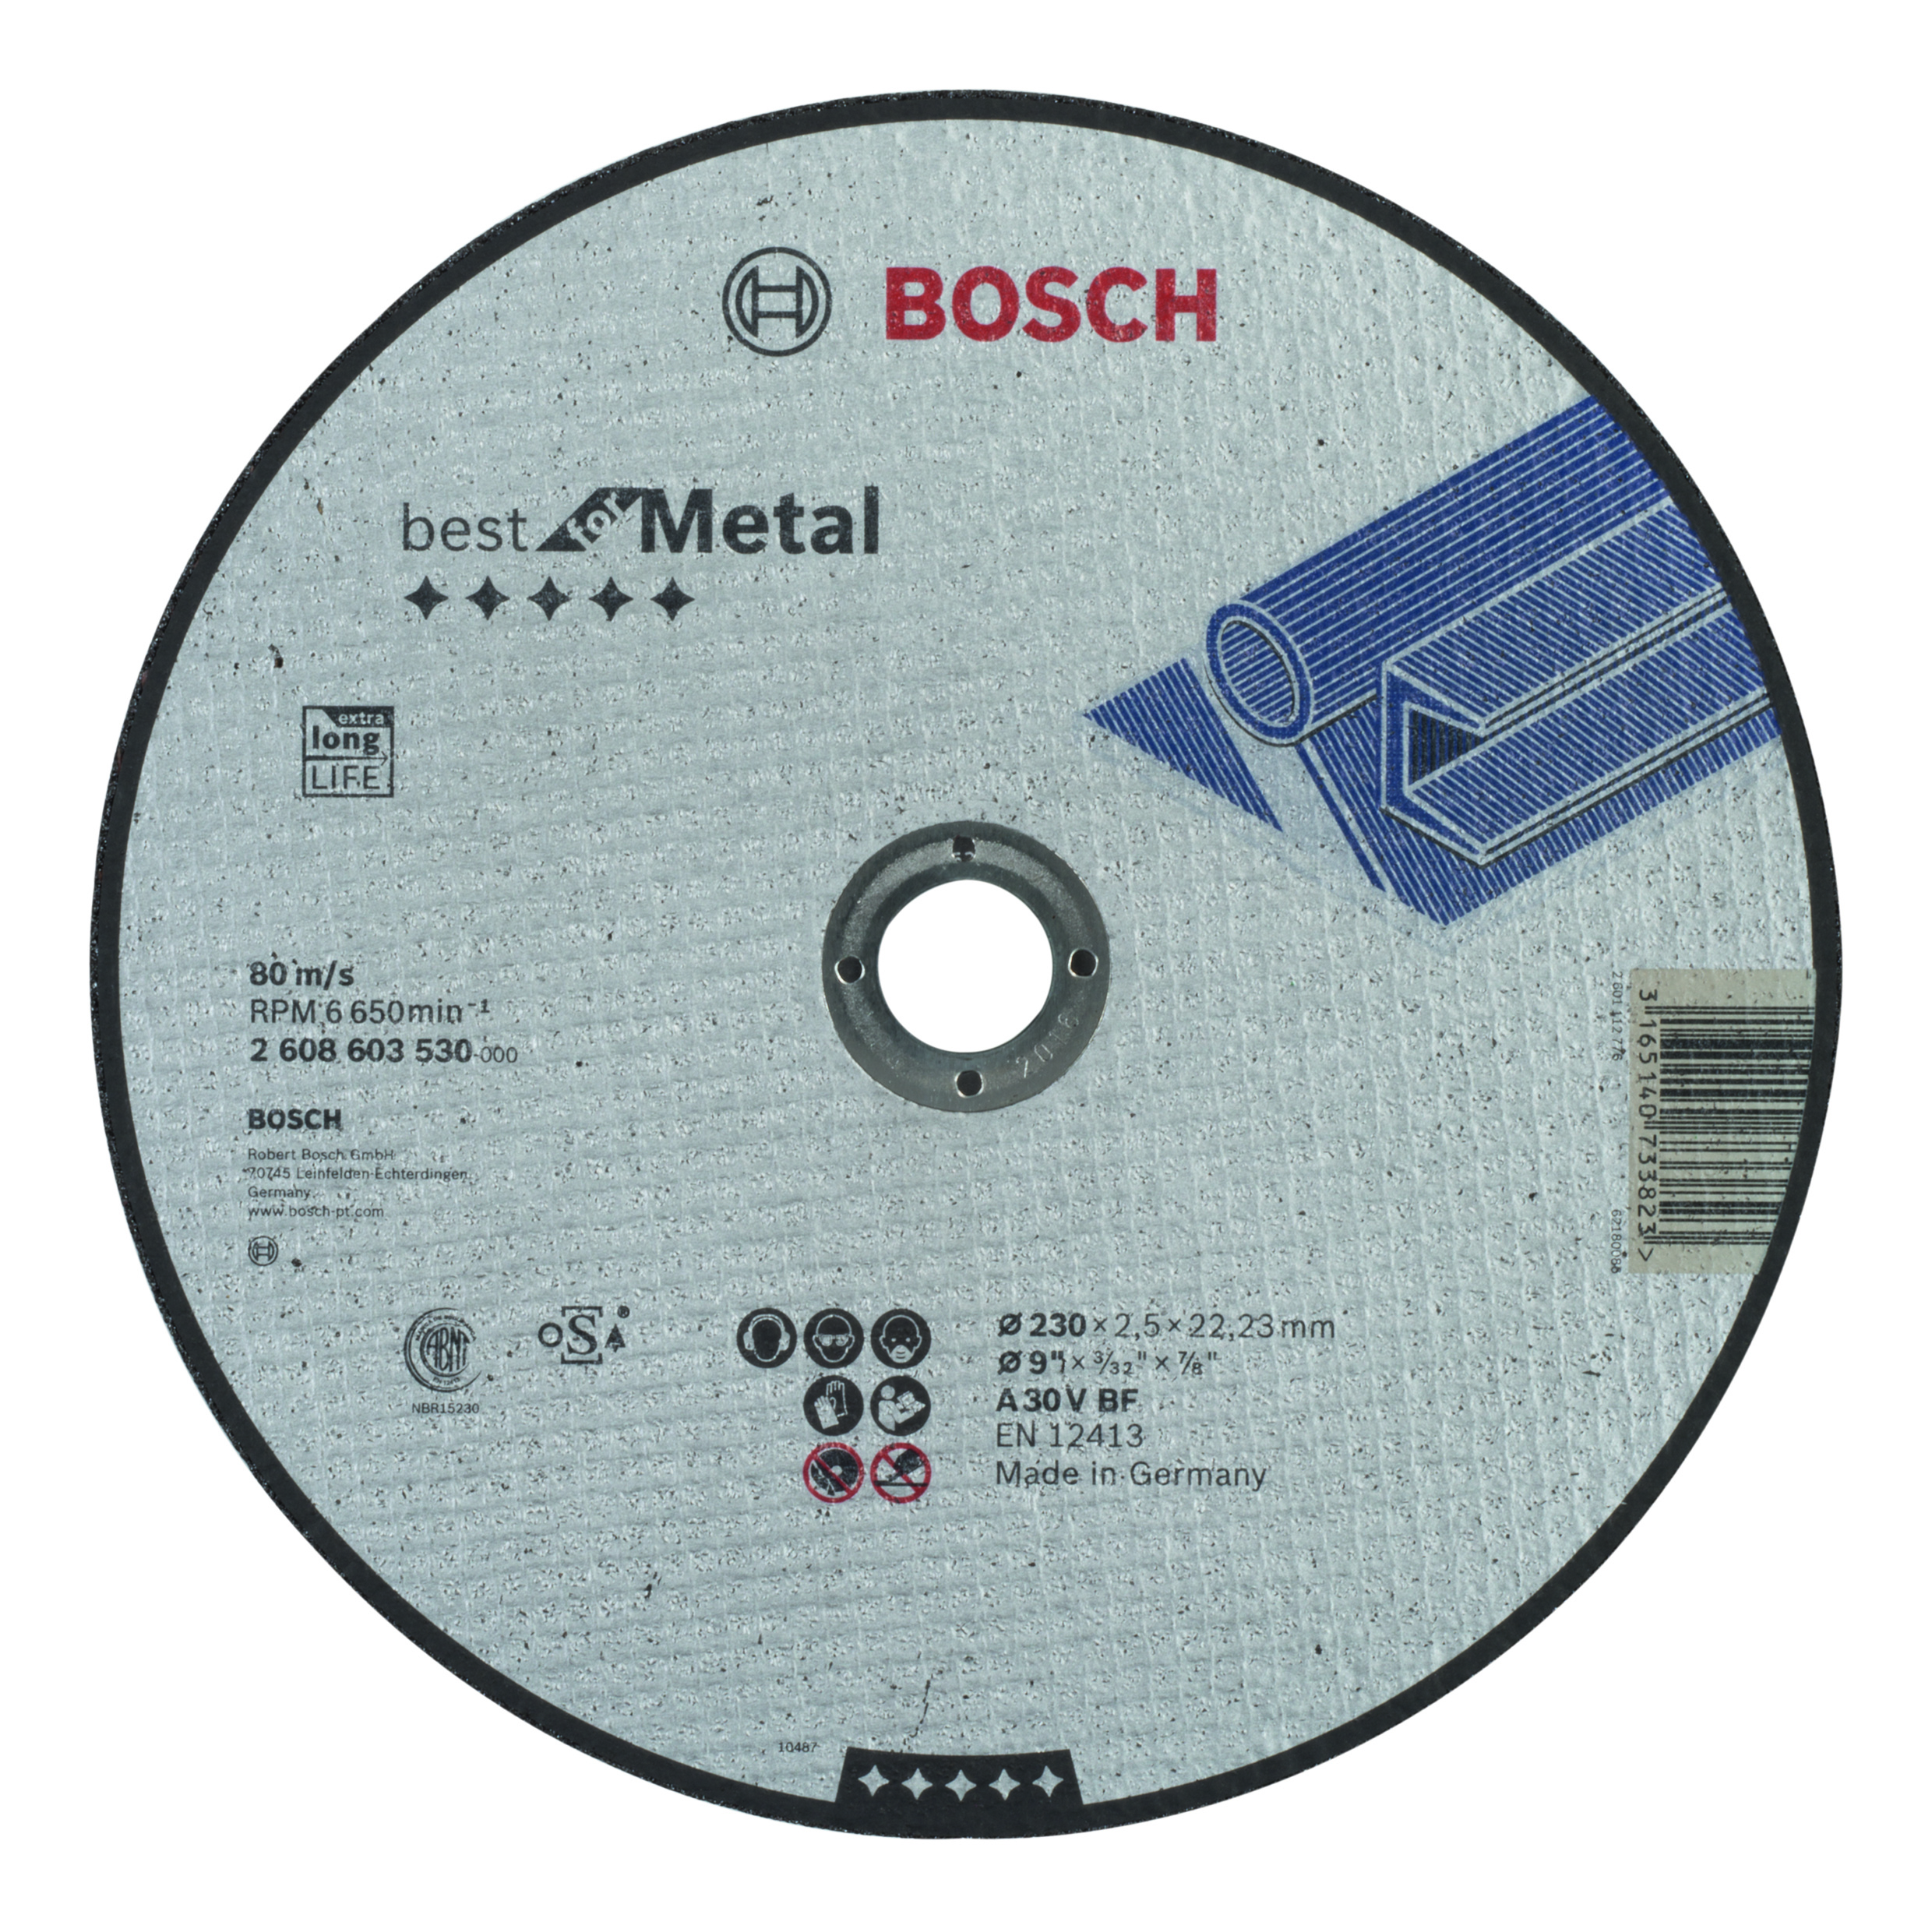 Bosch Trennscheibe gerade Best for Metal A 30 V BF, 230 mm, 2,5 mm